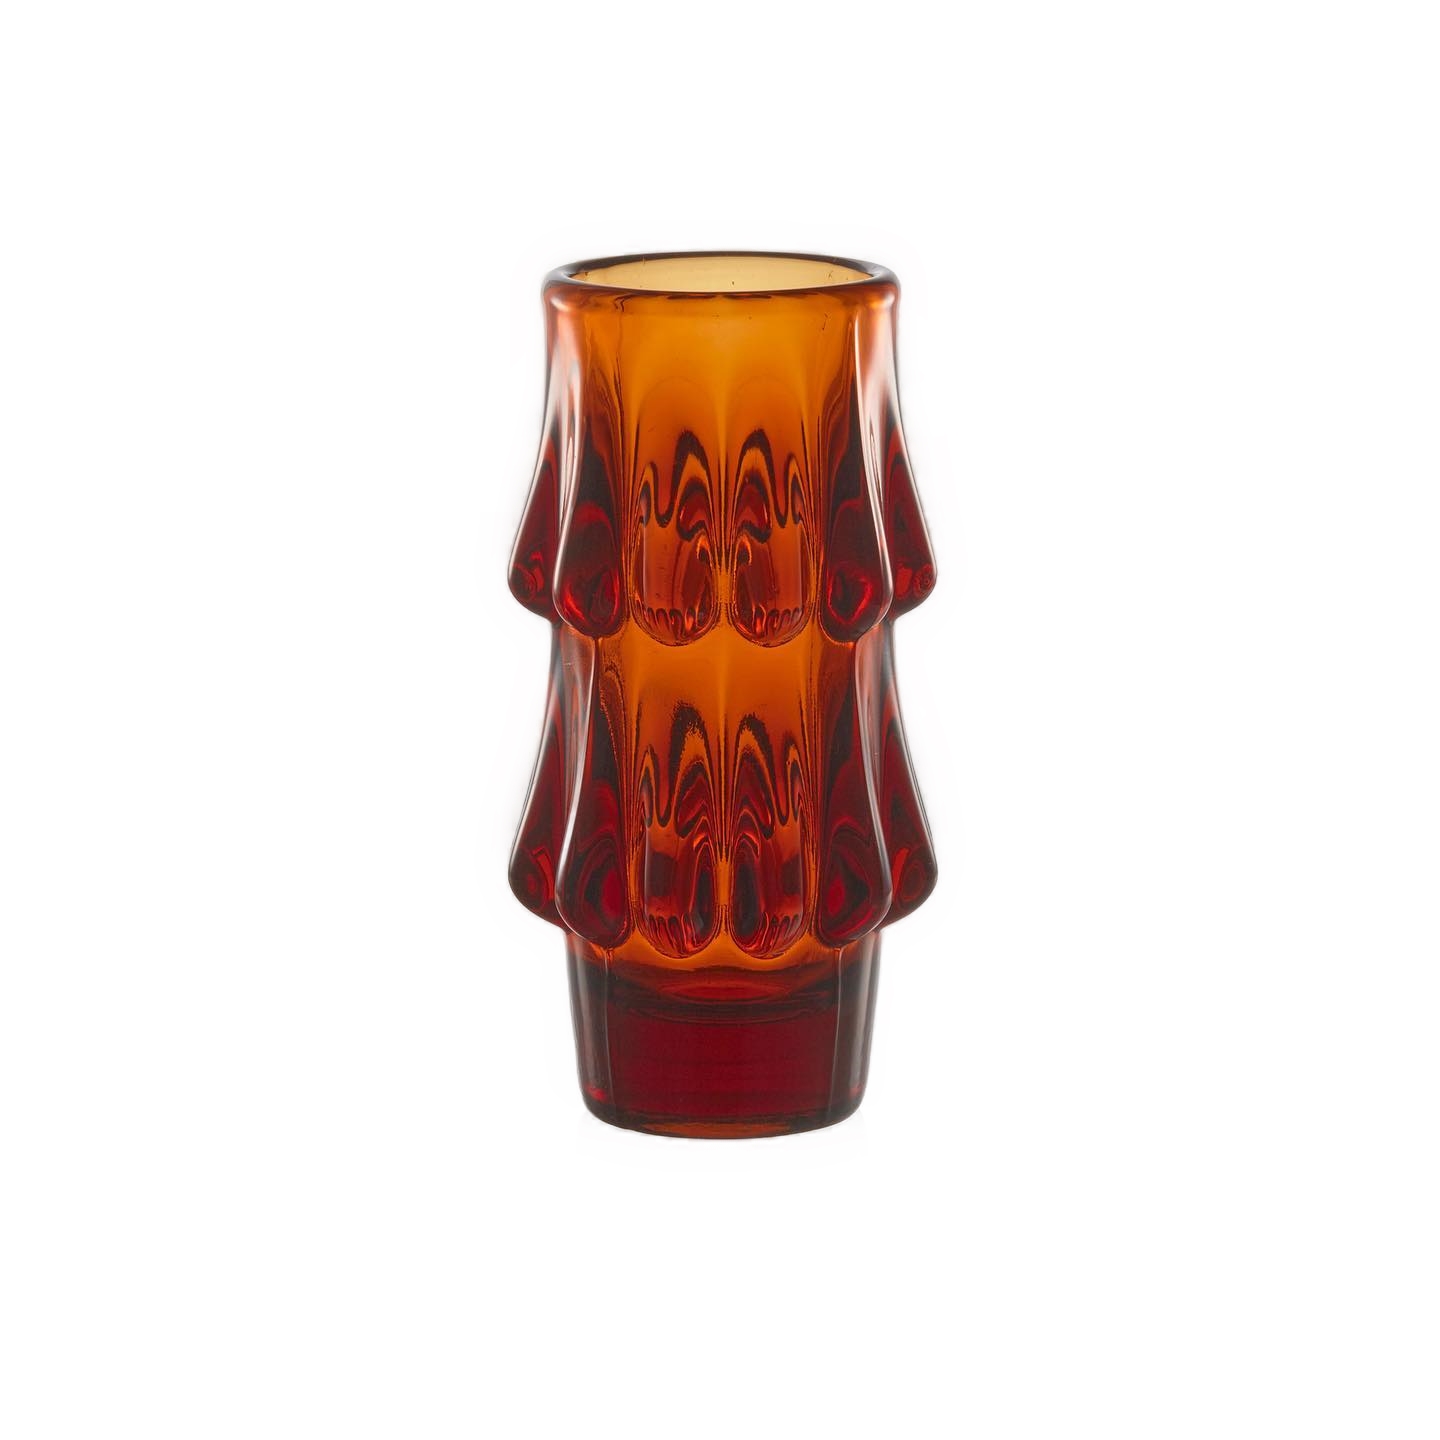 Rosice - 5201/180, Vase